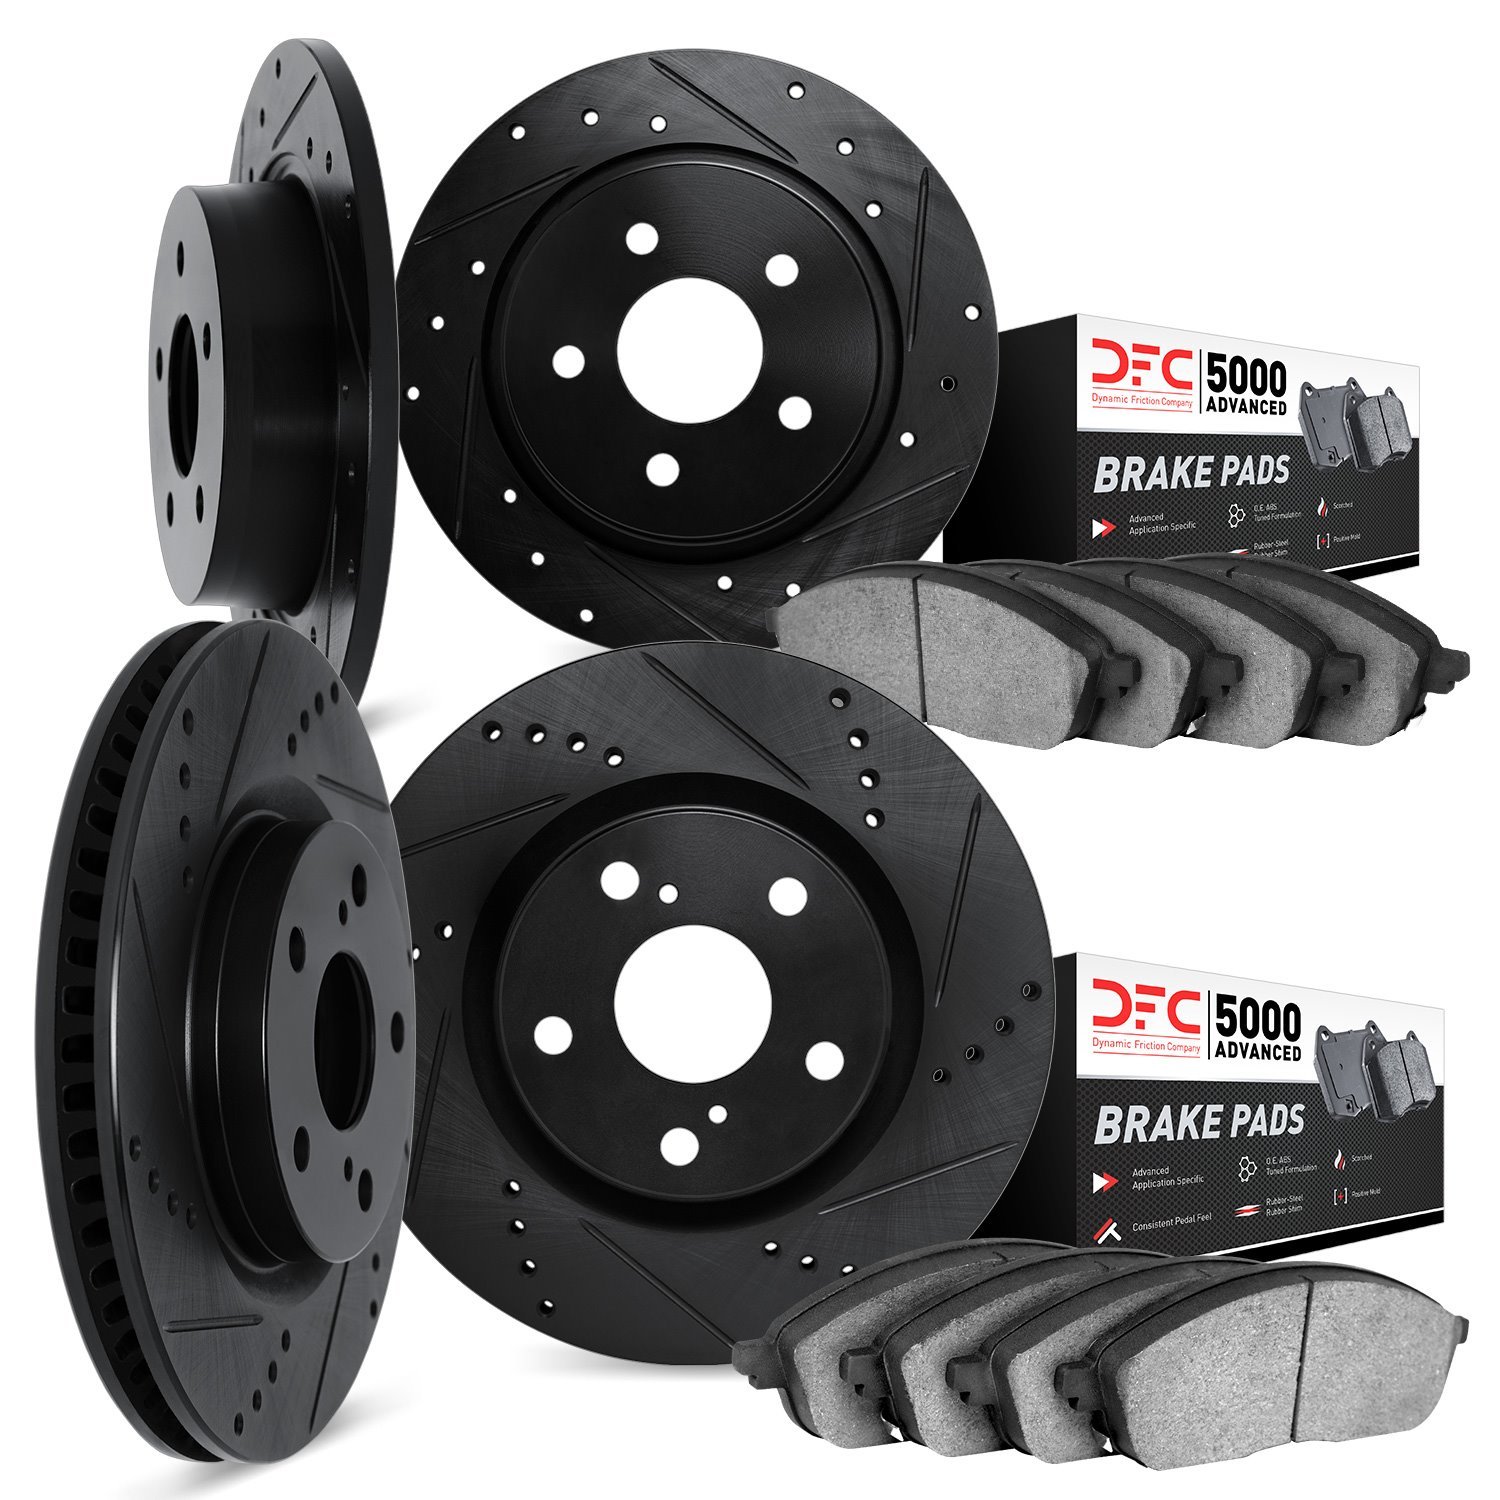 8504-54347 Drilled/Slotted Brake Rotors w/5000 Advanced Brake Pads Kit [Black], 2006-2010 Ford/Lincoln/Mercury/Mazda, Position: